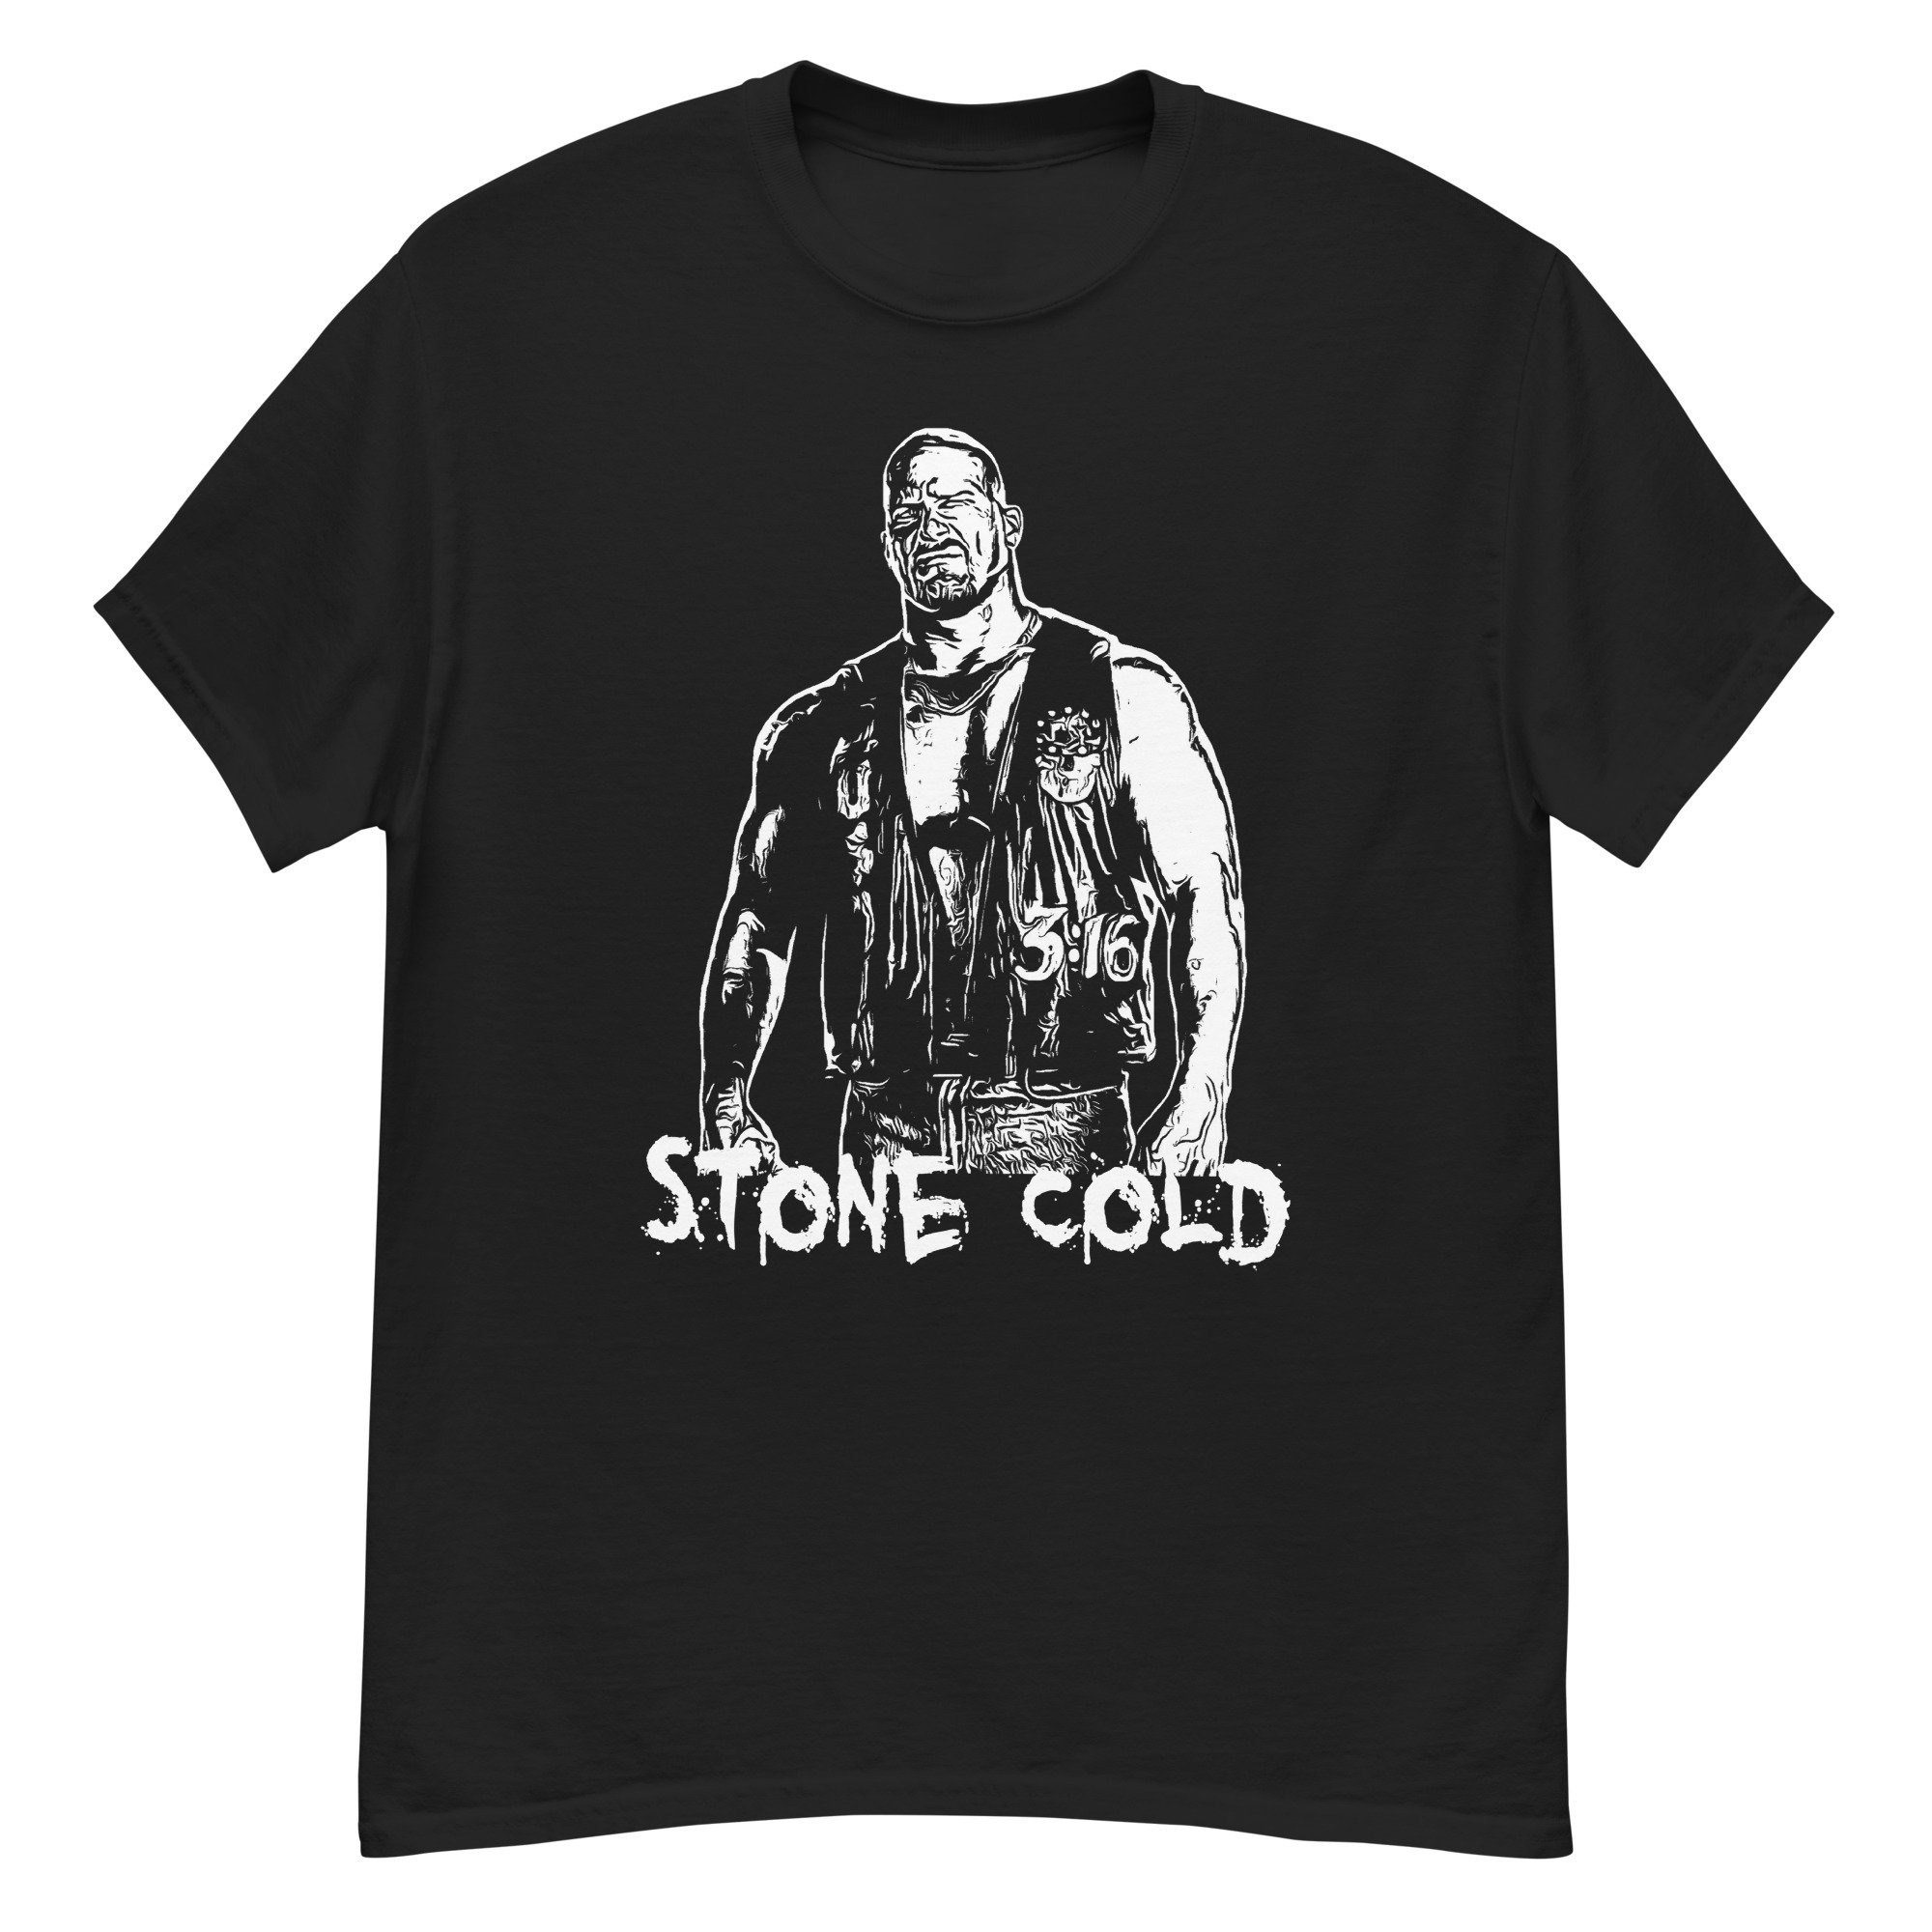 Discover stone cold steve austin tshirt wrestling tee